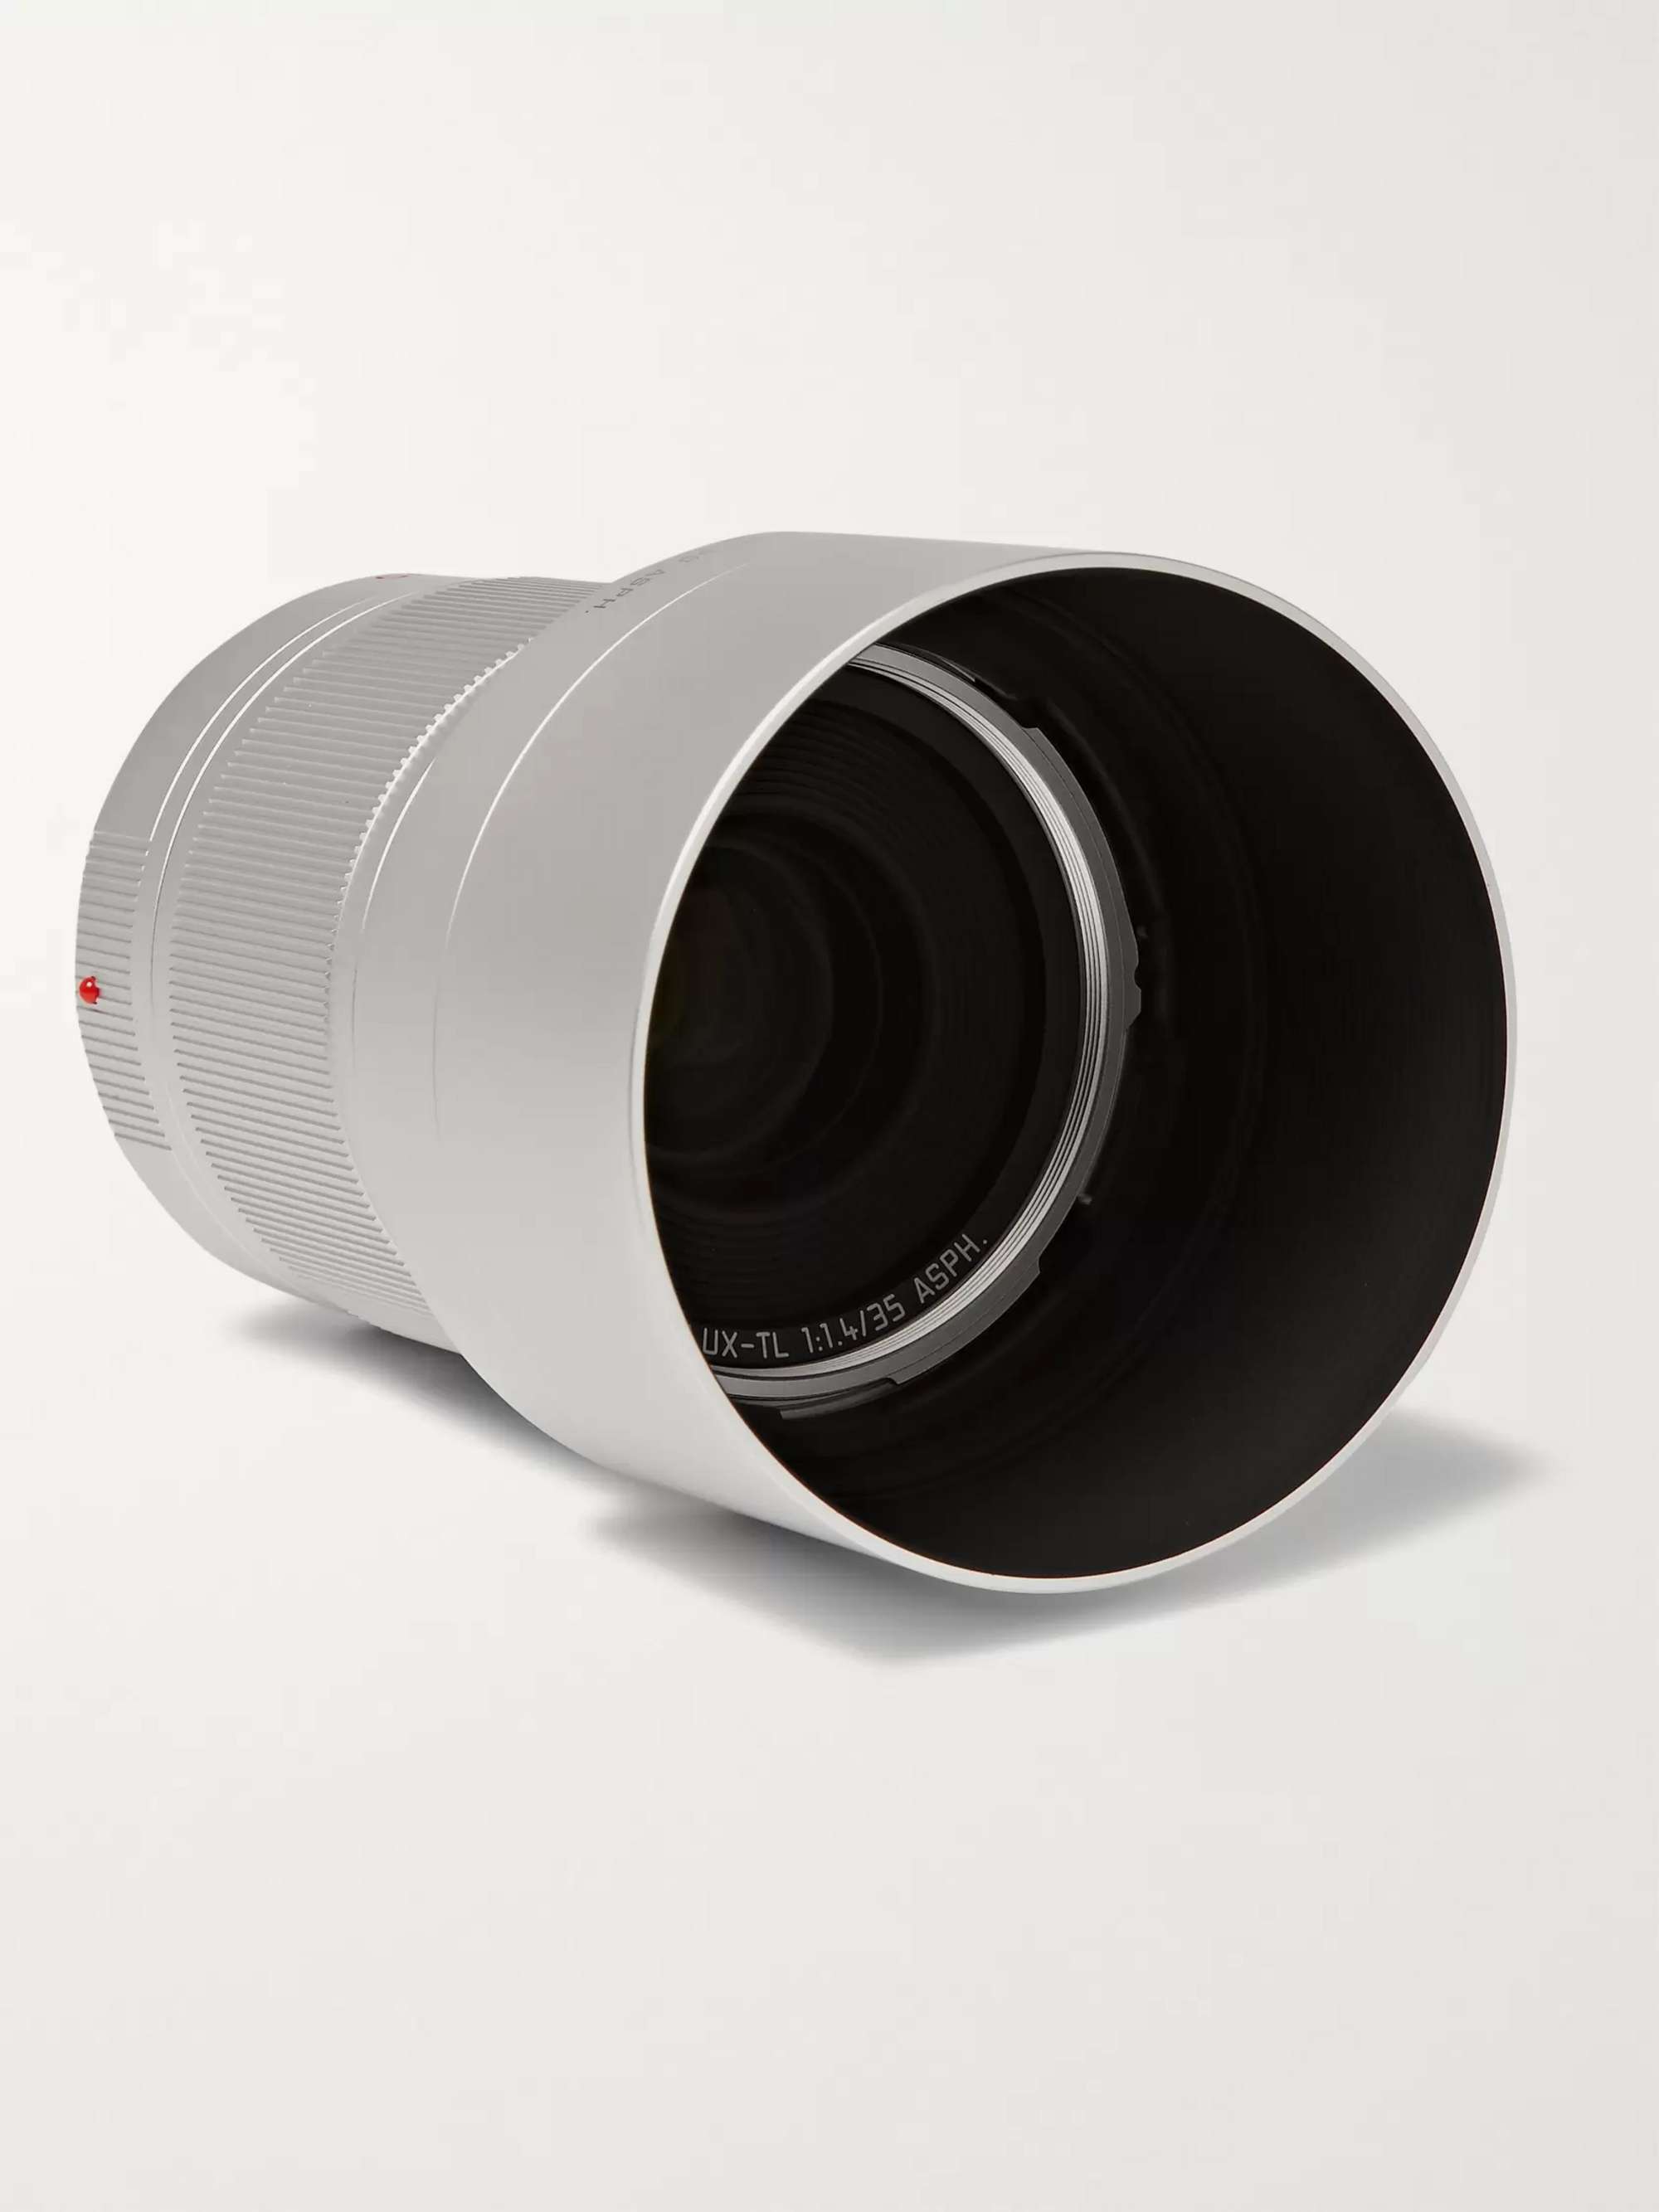 LEICA TL System Summilux-TL 35mm Lens